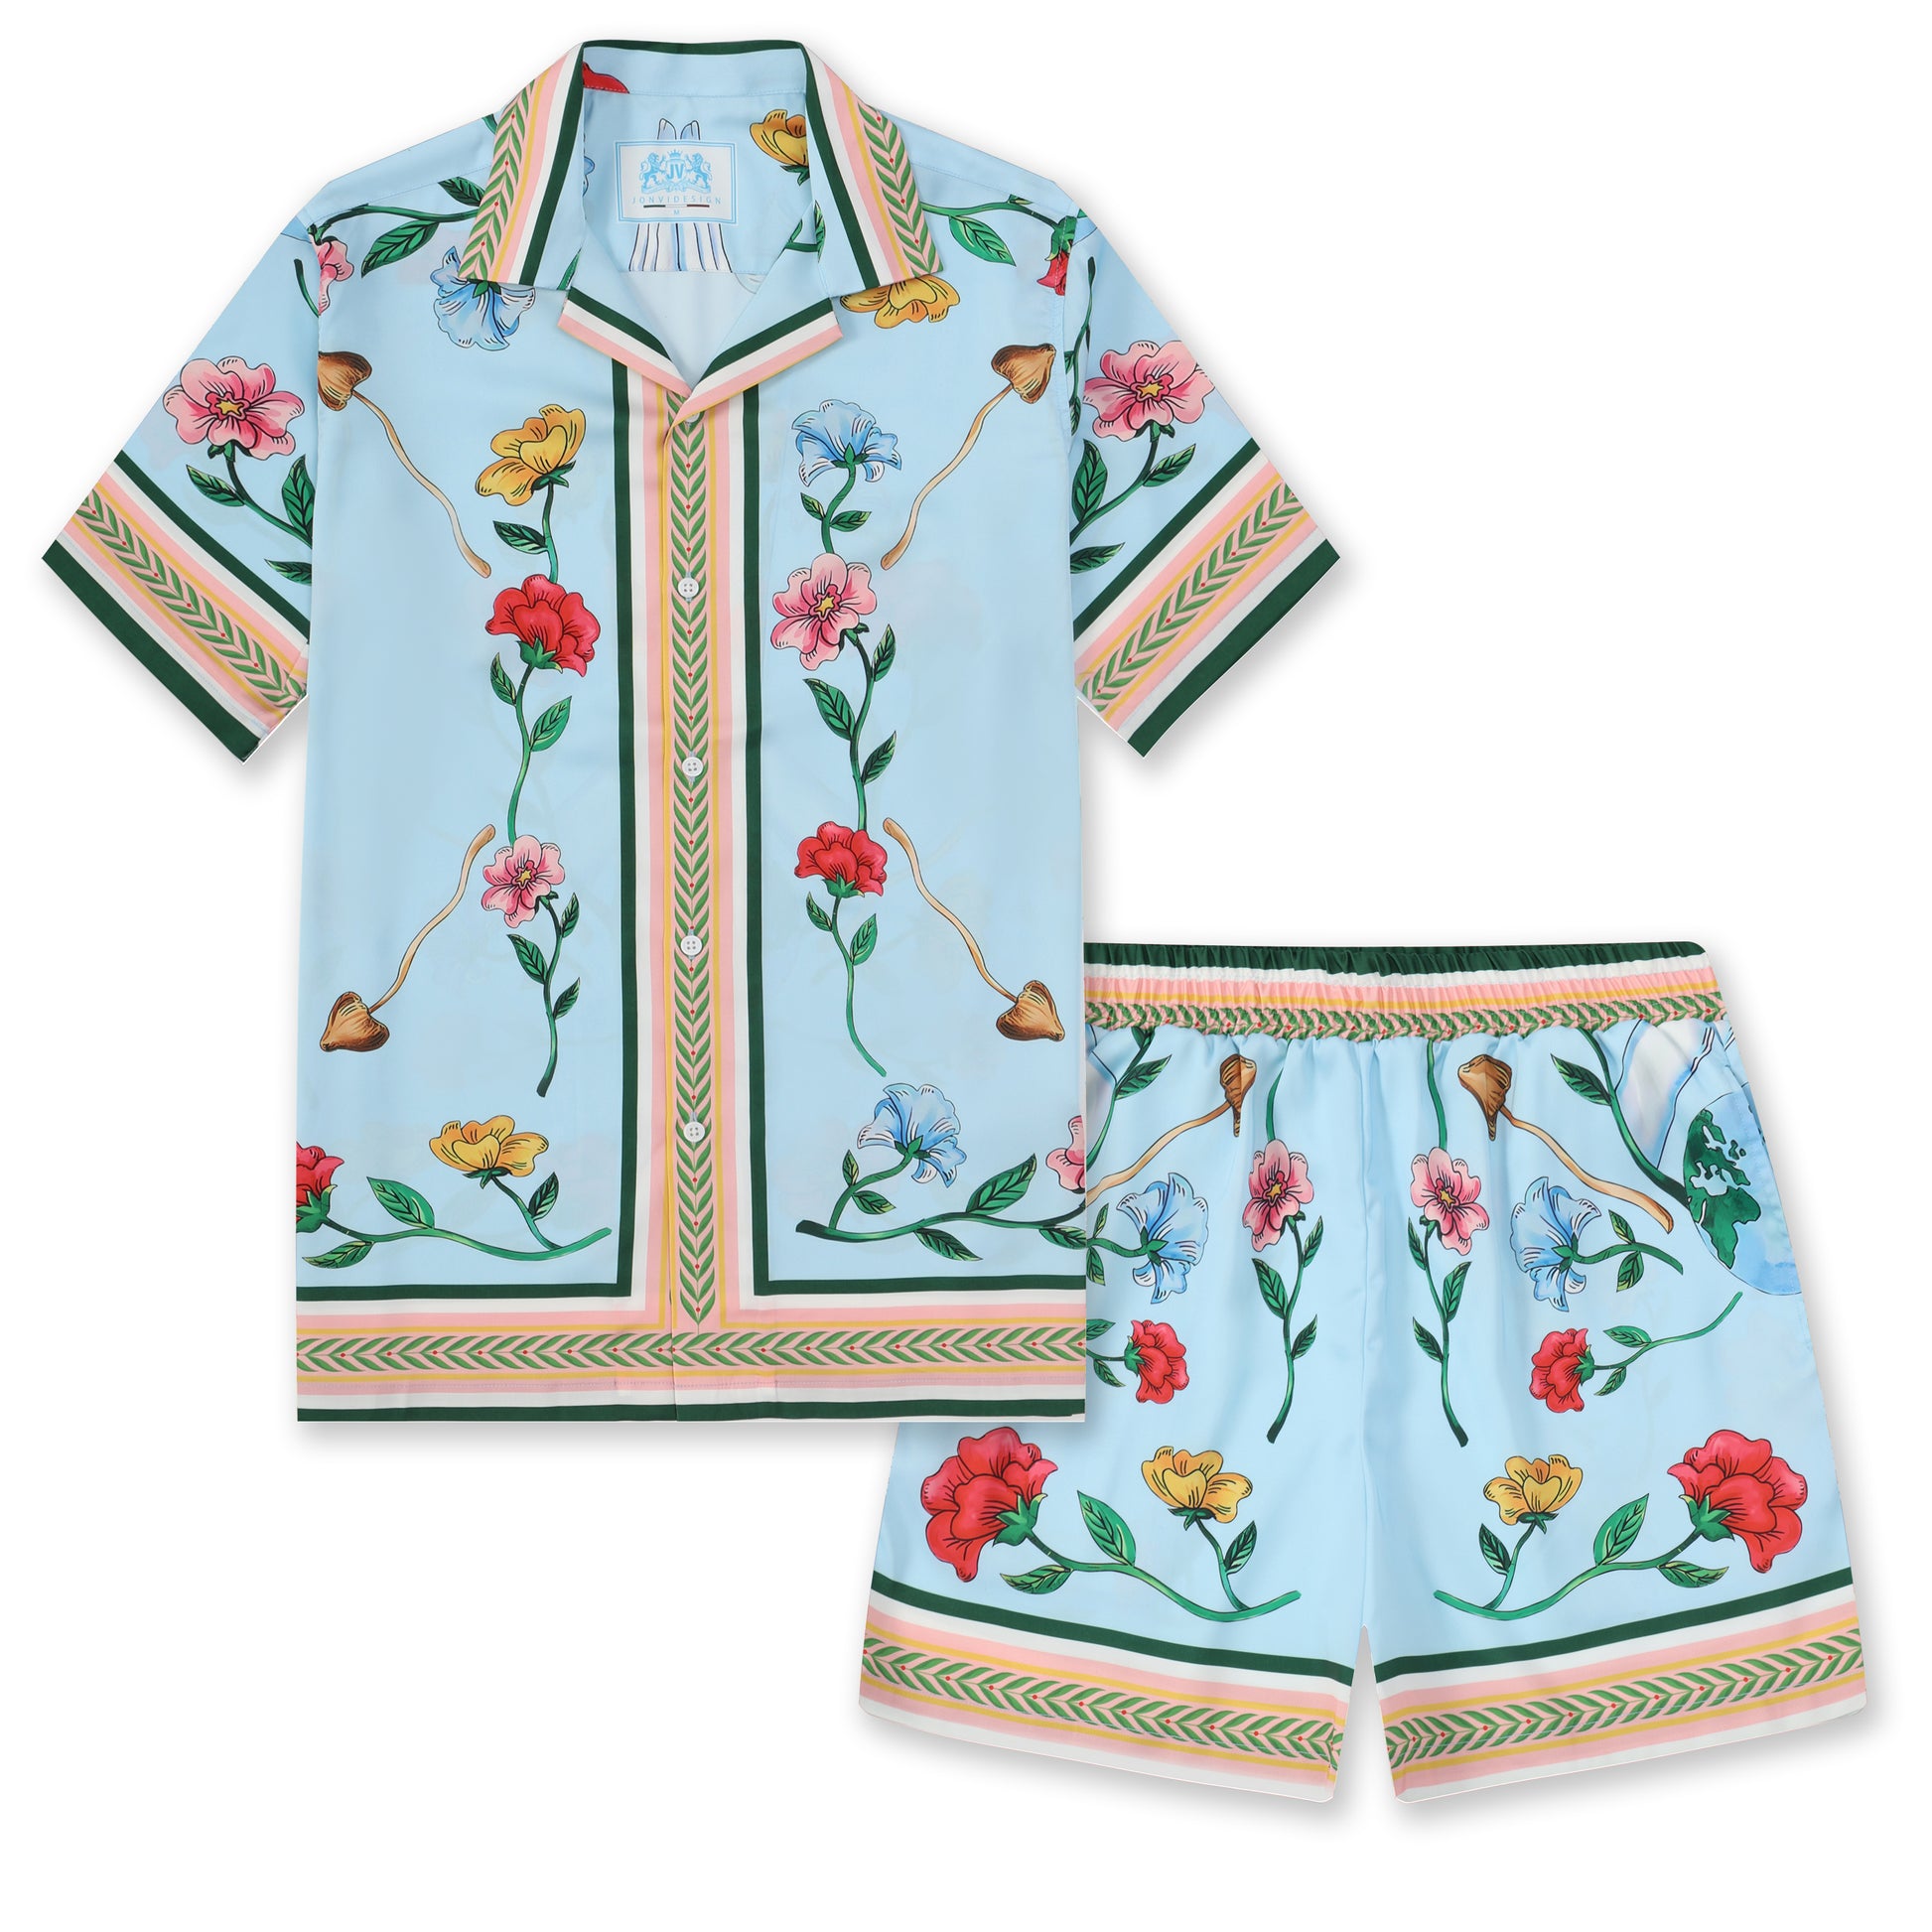 Floral Pattern Elastic Waistband Casual Shorts Jonvidesign